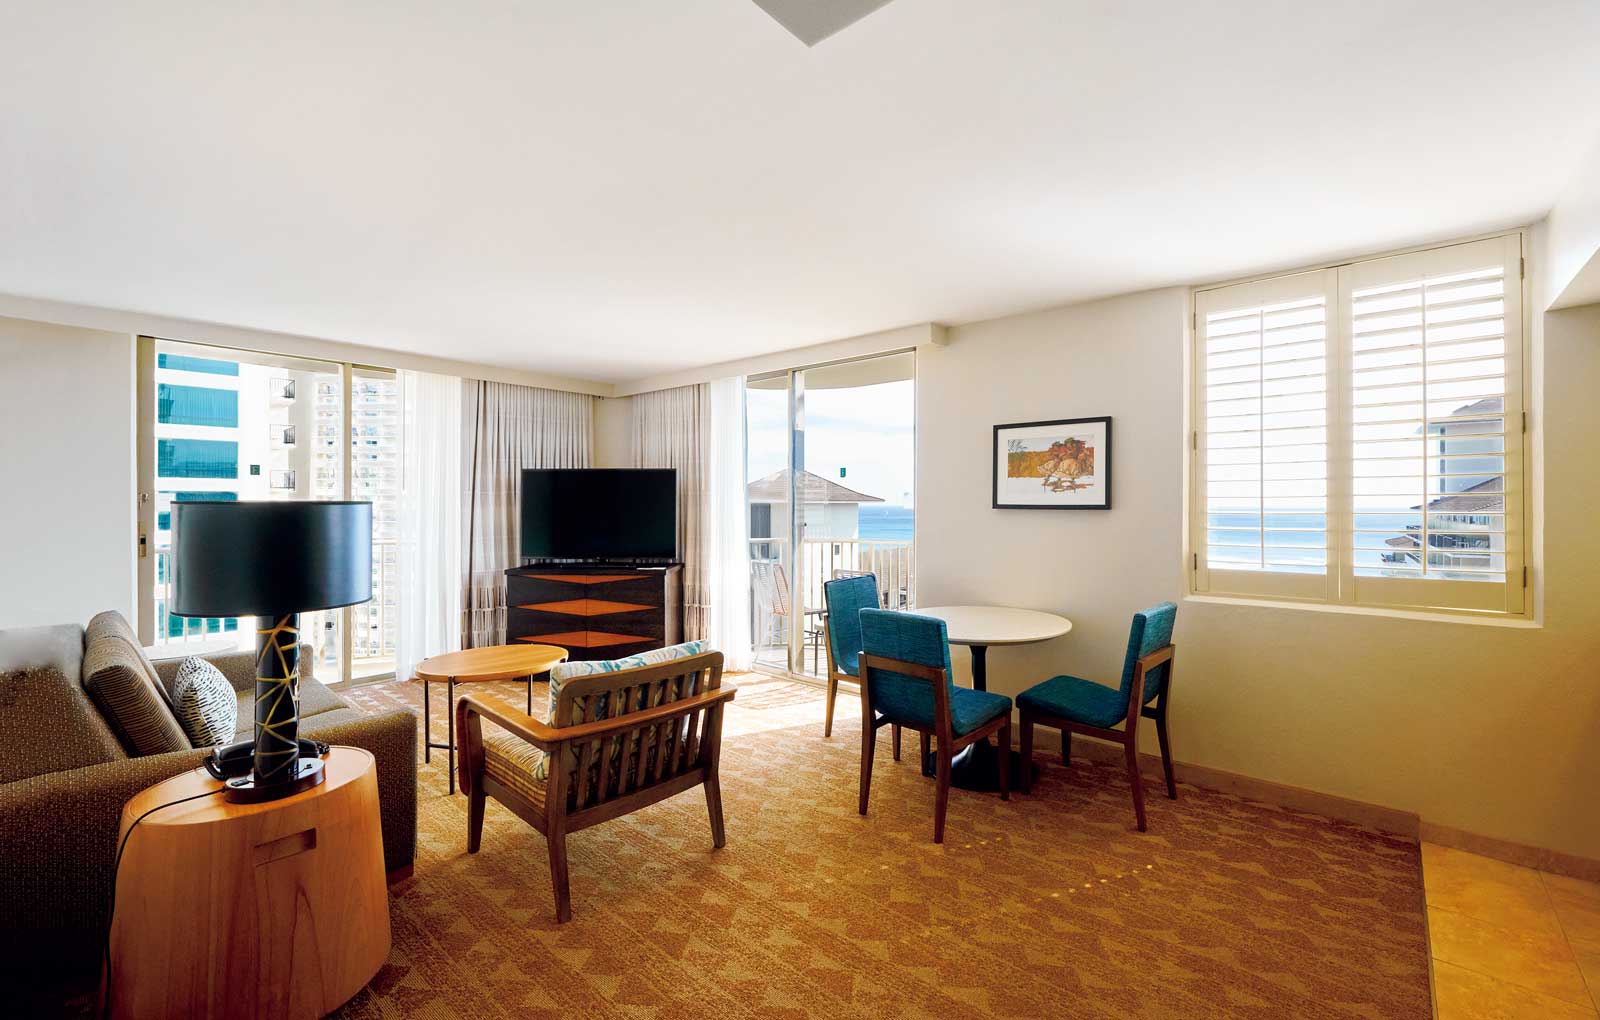 Embassy Suites by Hilton Waikiki Beach Walk　エンバシー・スイーツ・バイ・ヒルトン・ ワイキキ・ビーチ・ウォーク